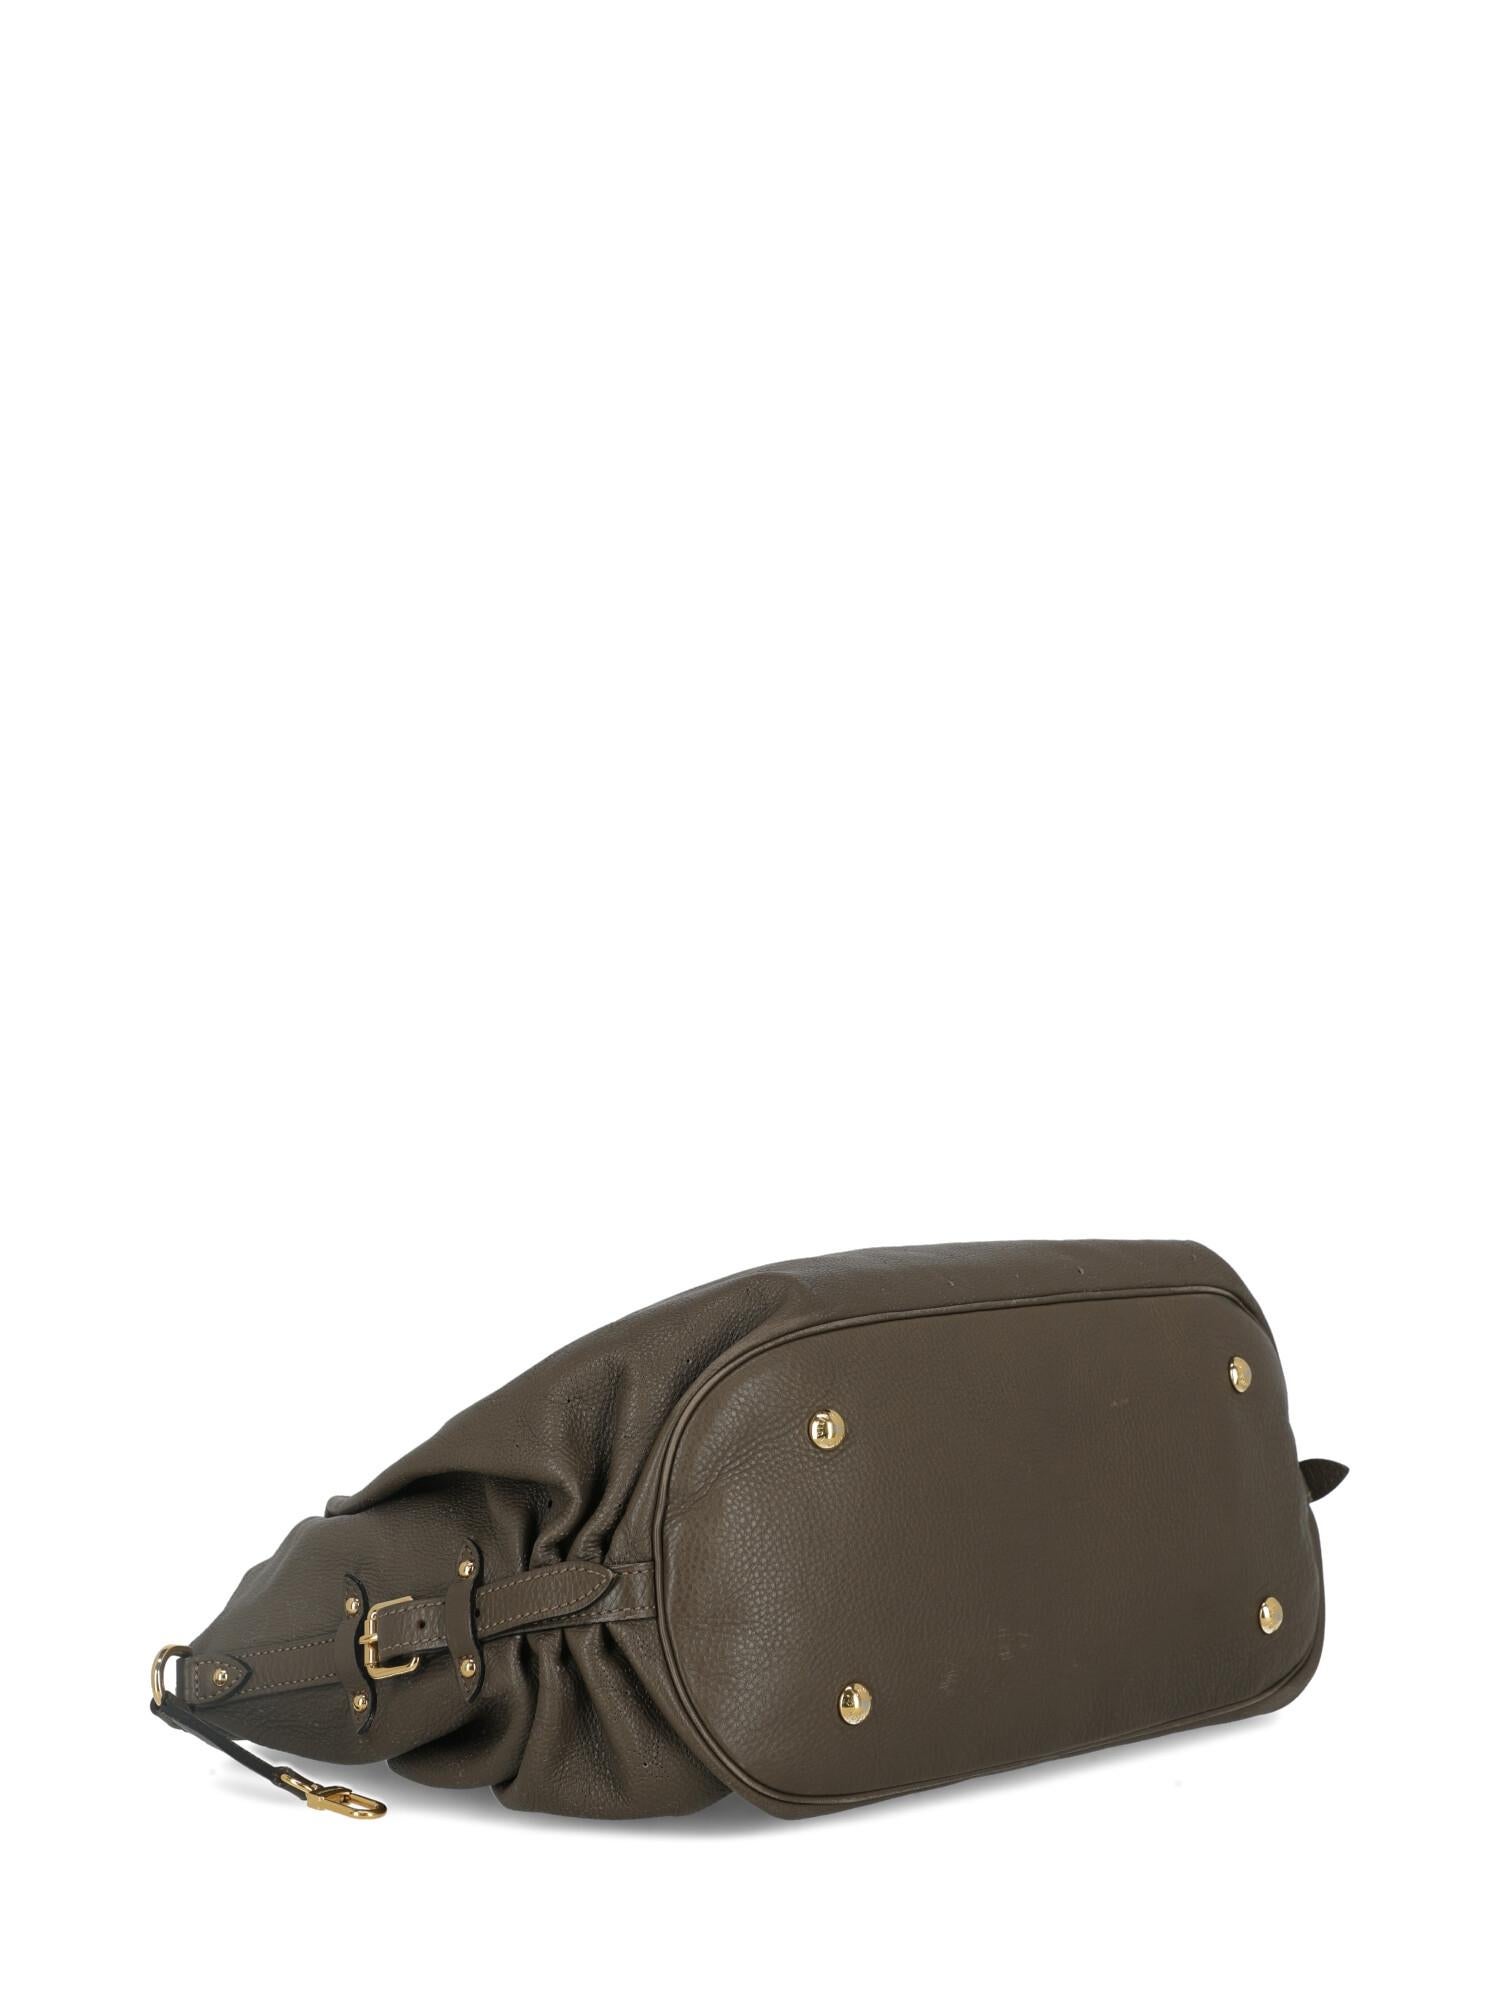 Women's Louis Vuitton Woman Handbag Mahina Brown Leather